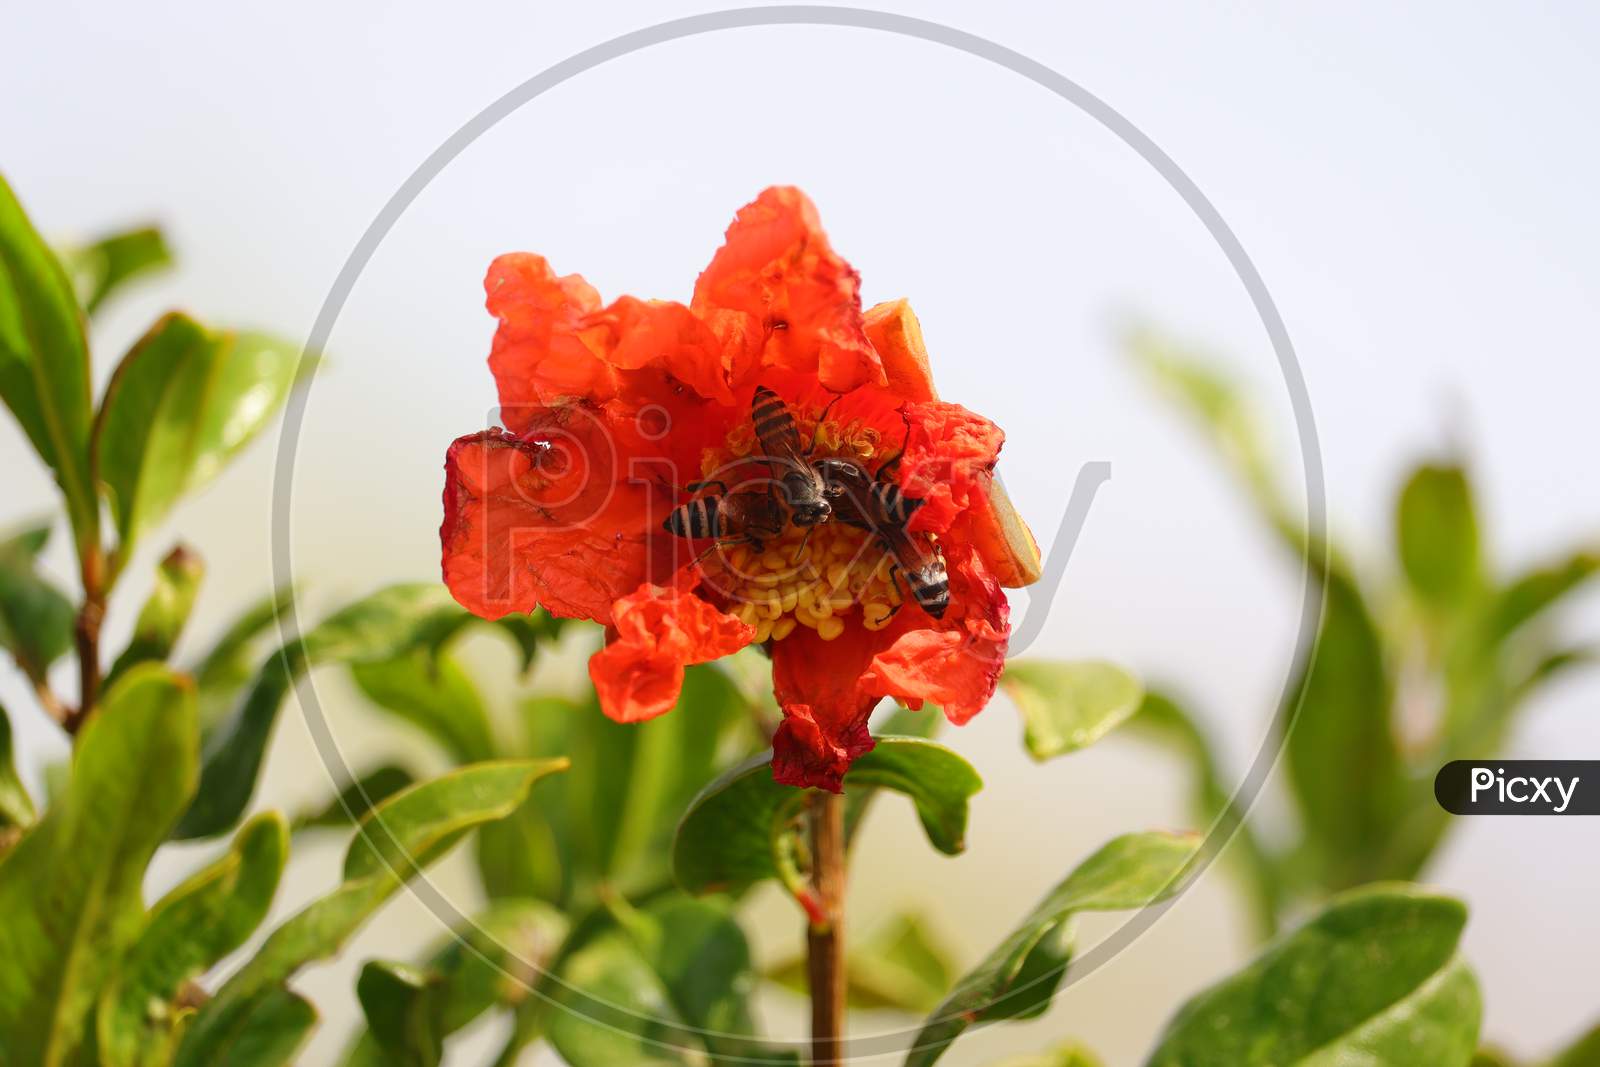 blur three honeybee collection nectar on red pomegranate flower